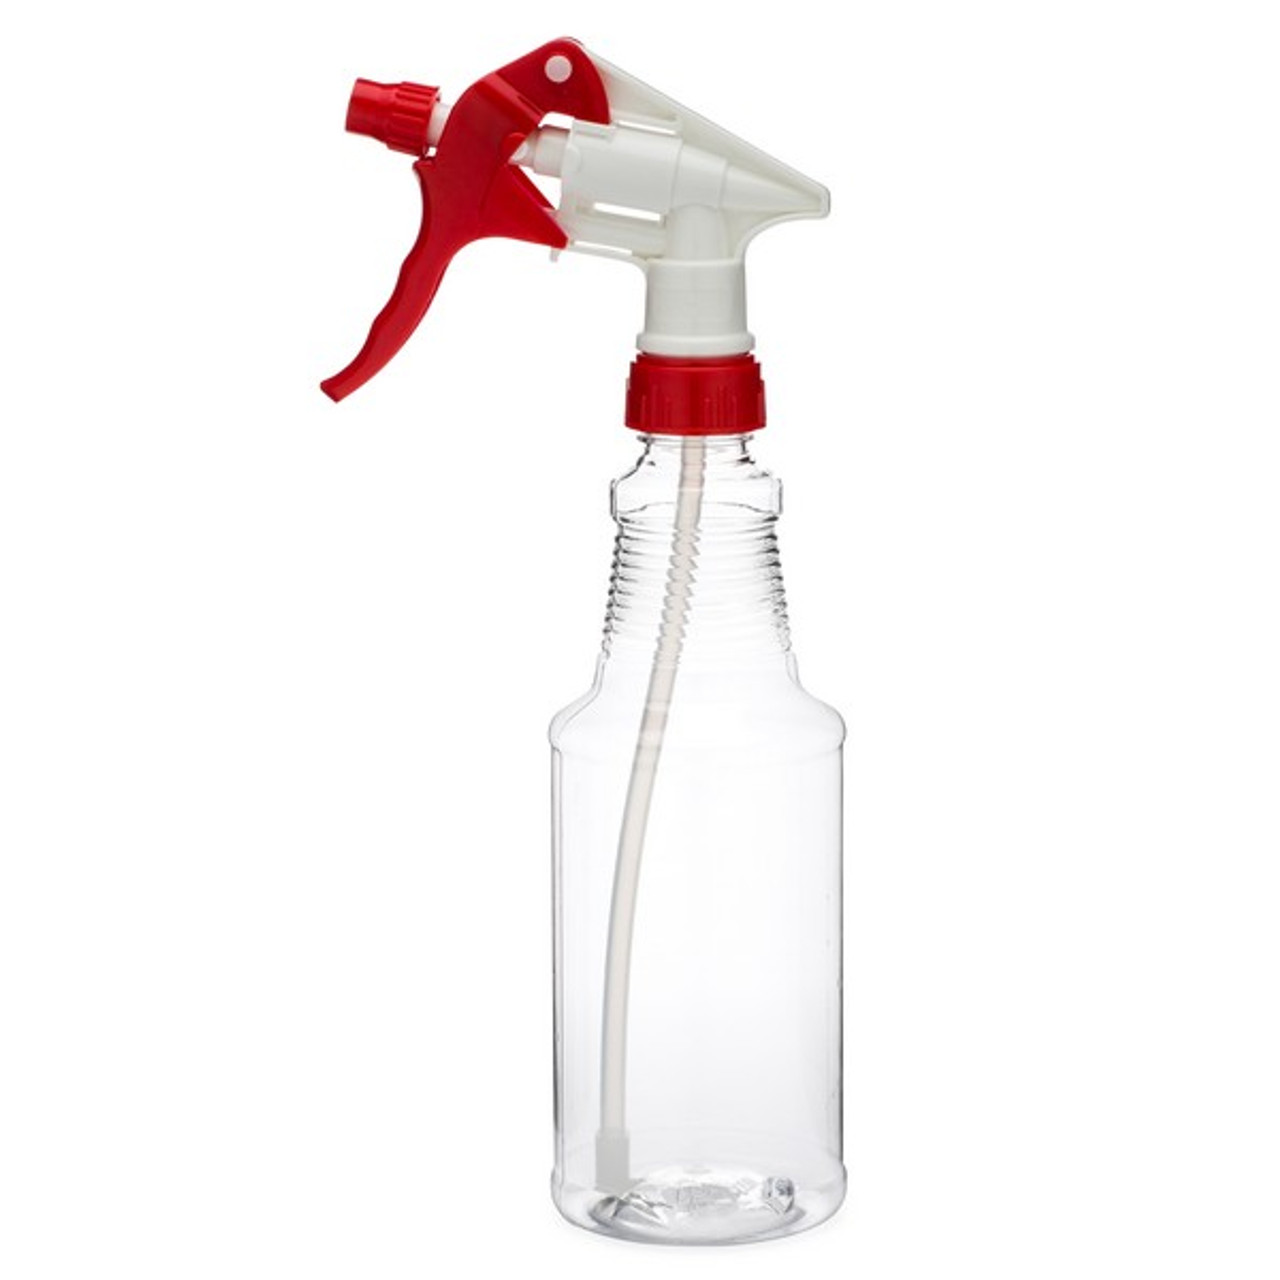 PET Carafe Spray Bottle with Trigger Sprayer, Bulk